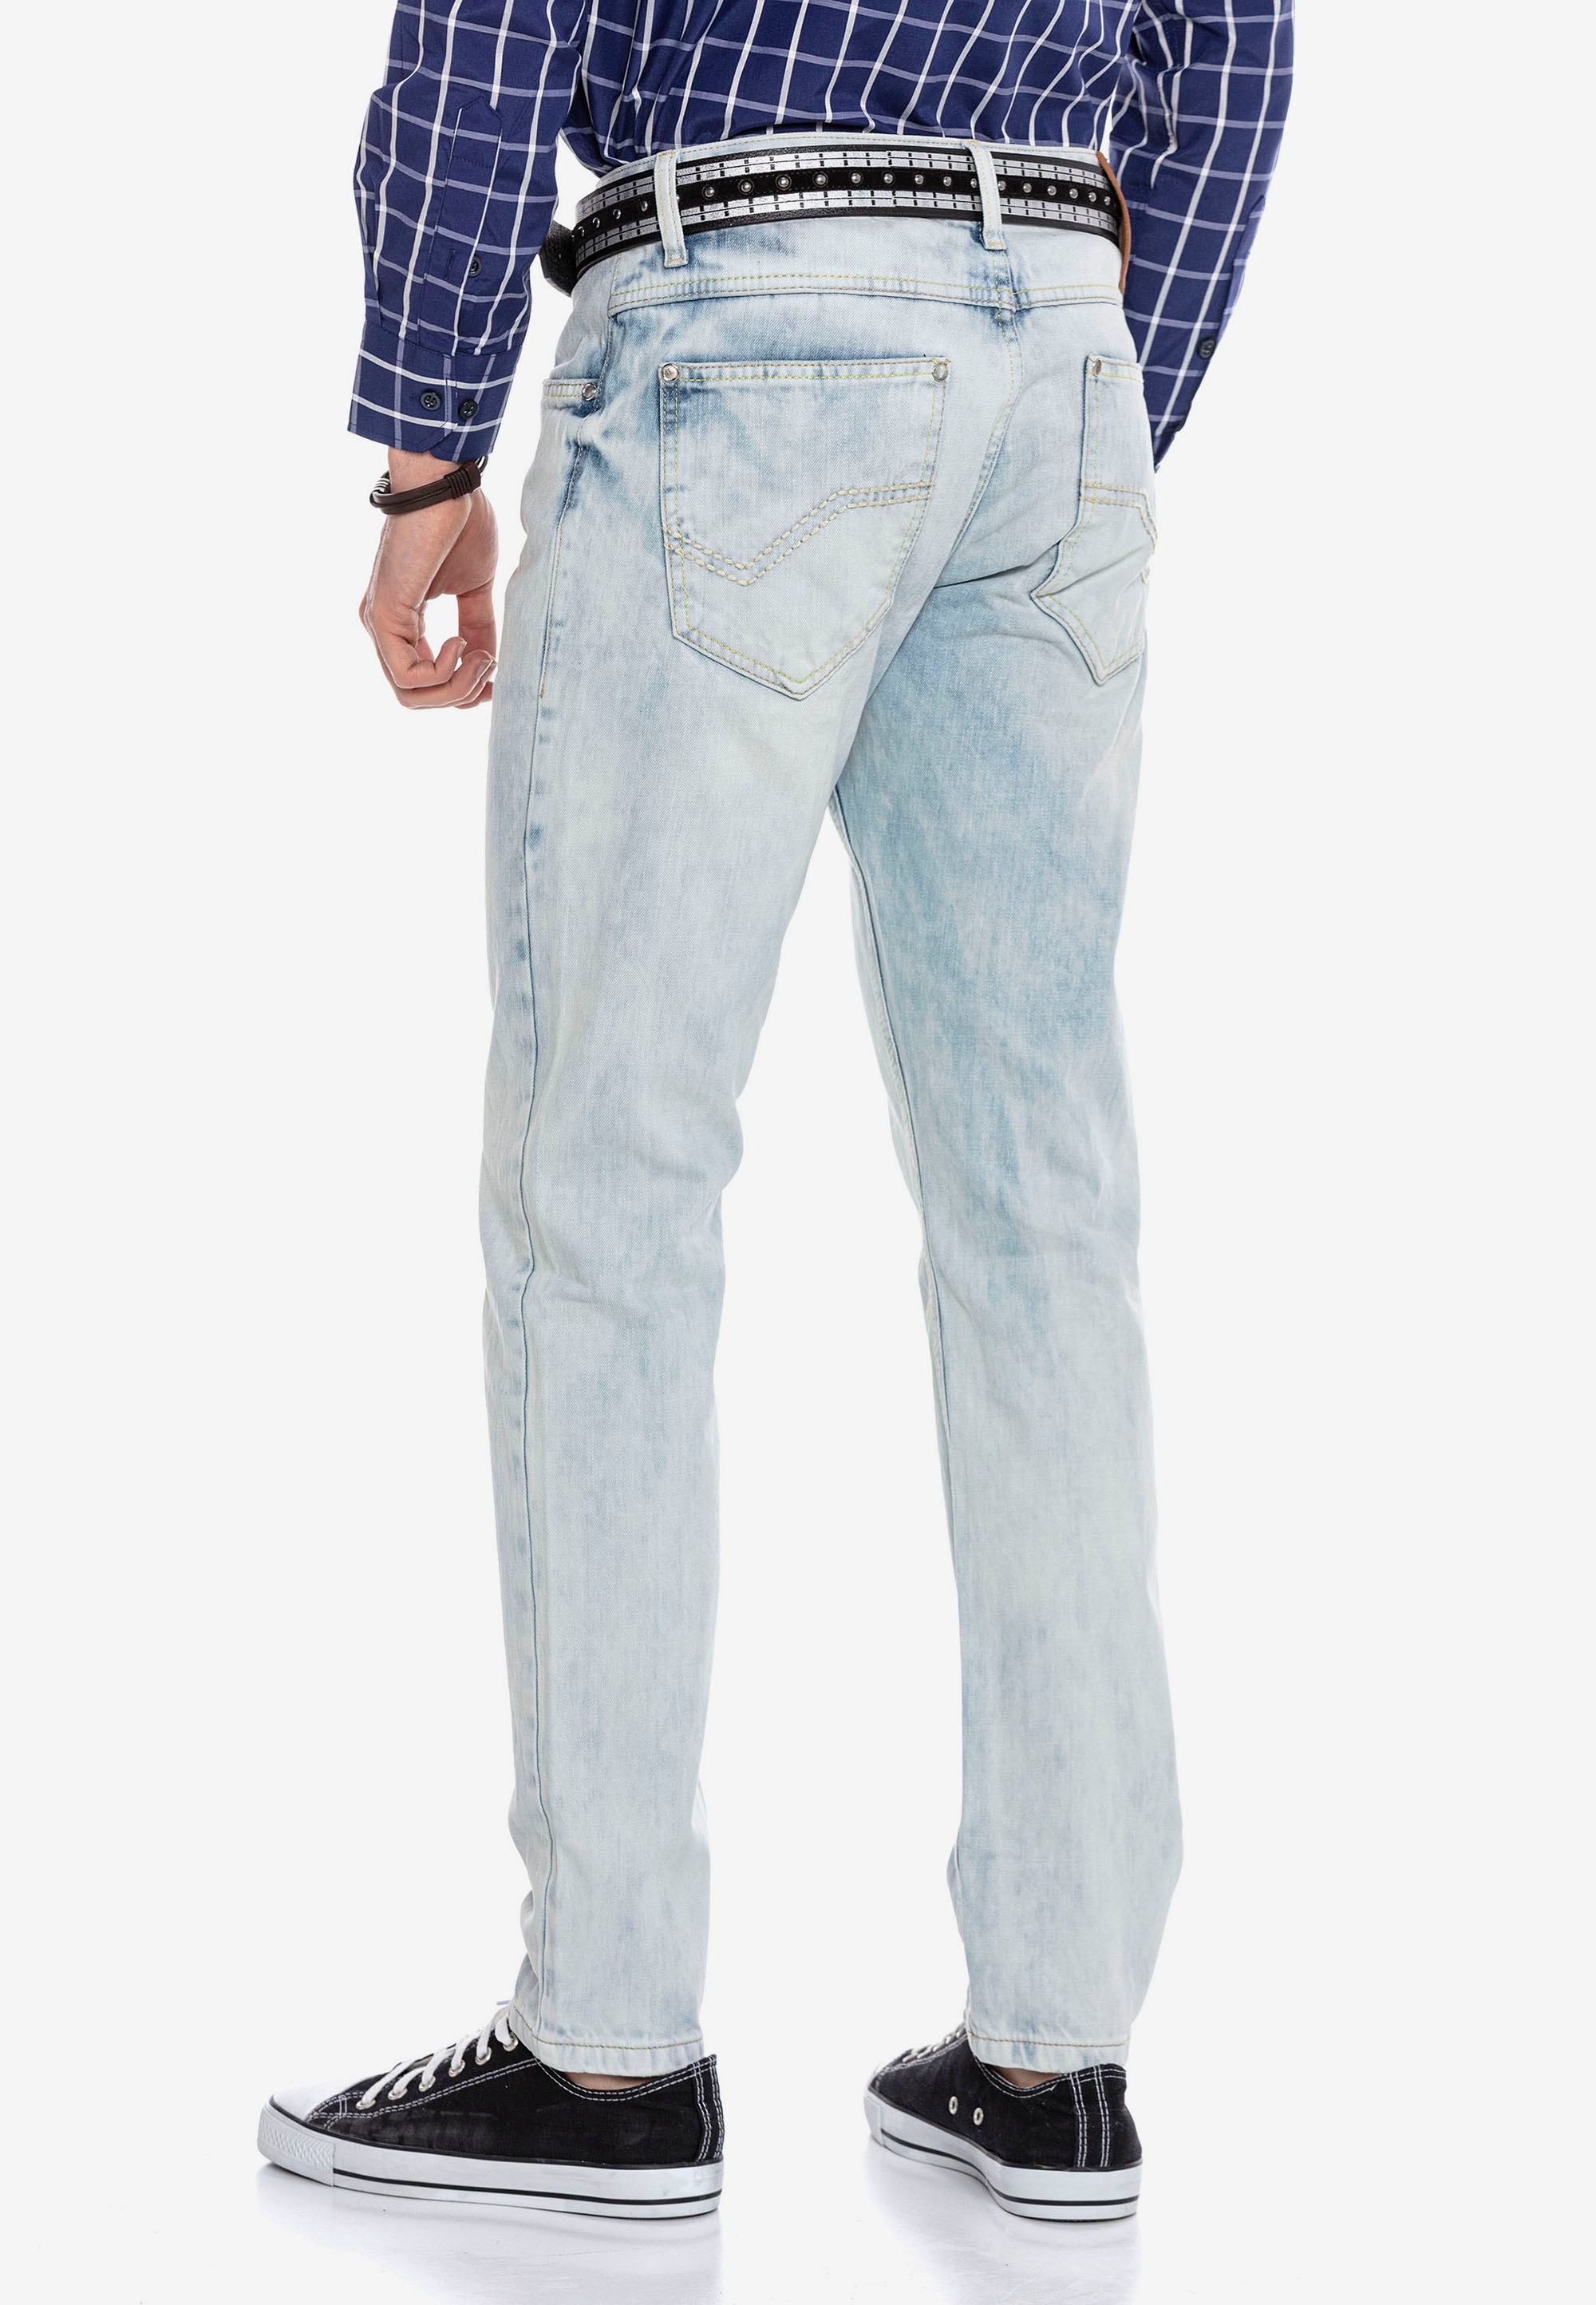 Cipo & Baxx Bequeme Jeans, mit schmalem Saum in Straight Fit